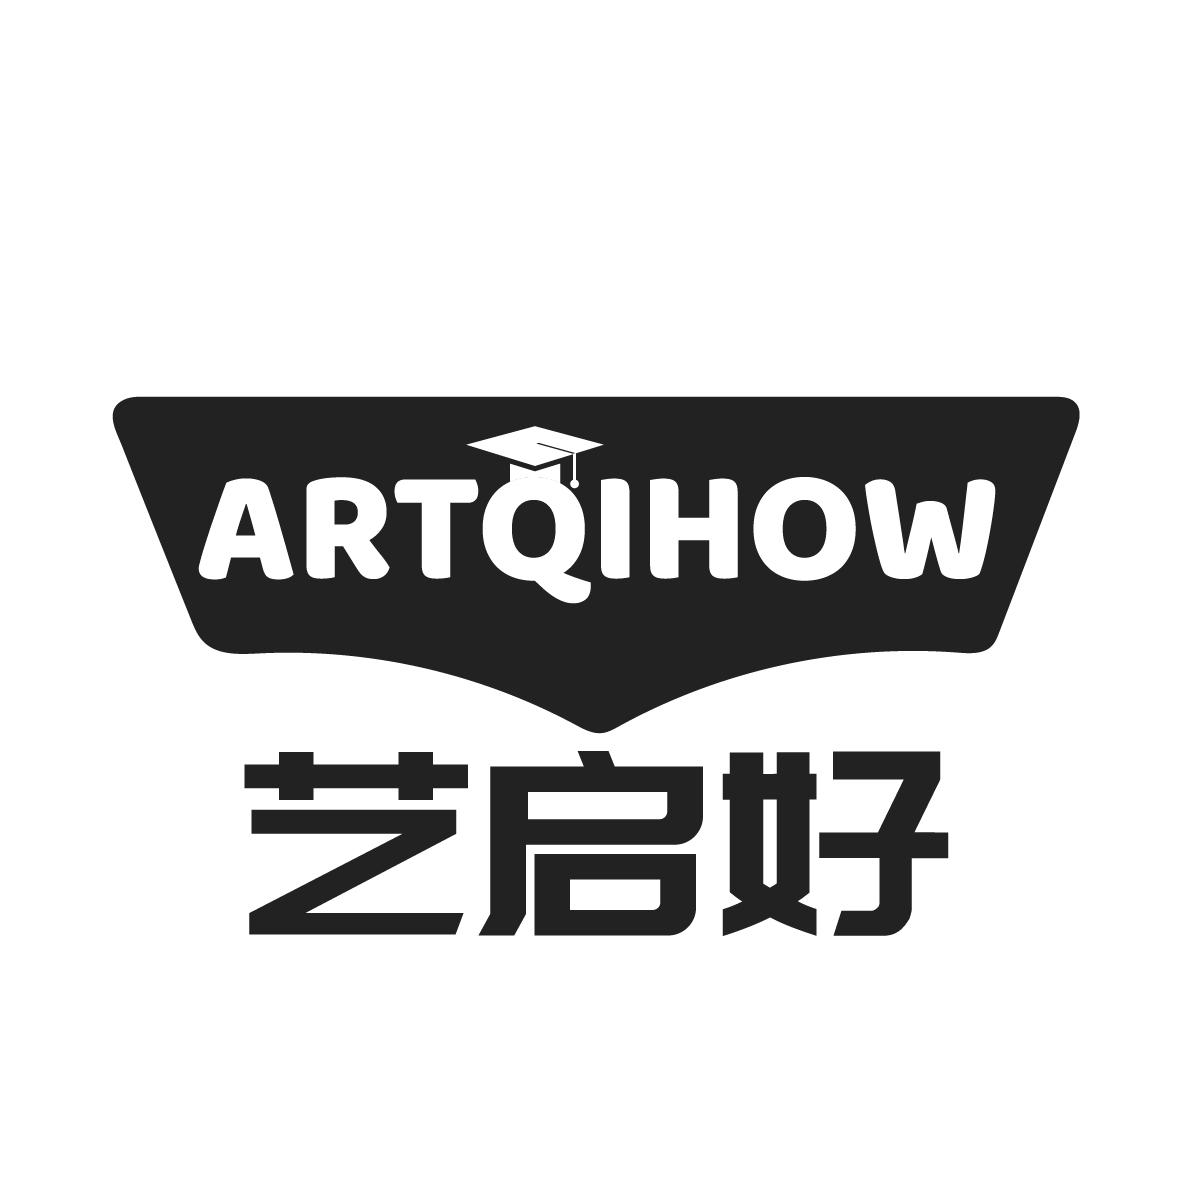  ARTQIHOW